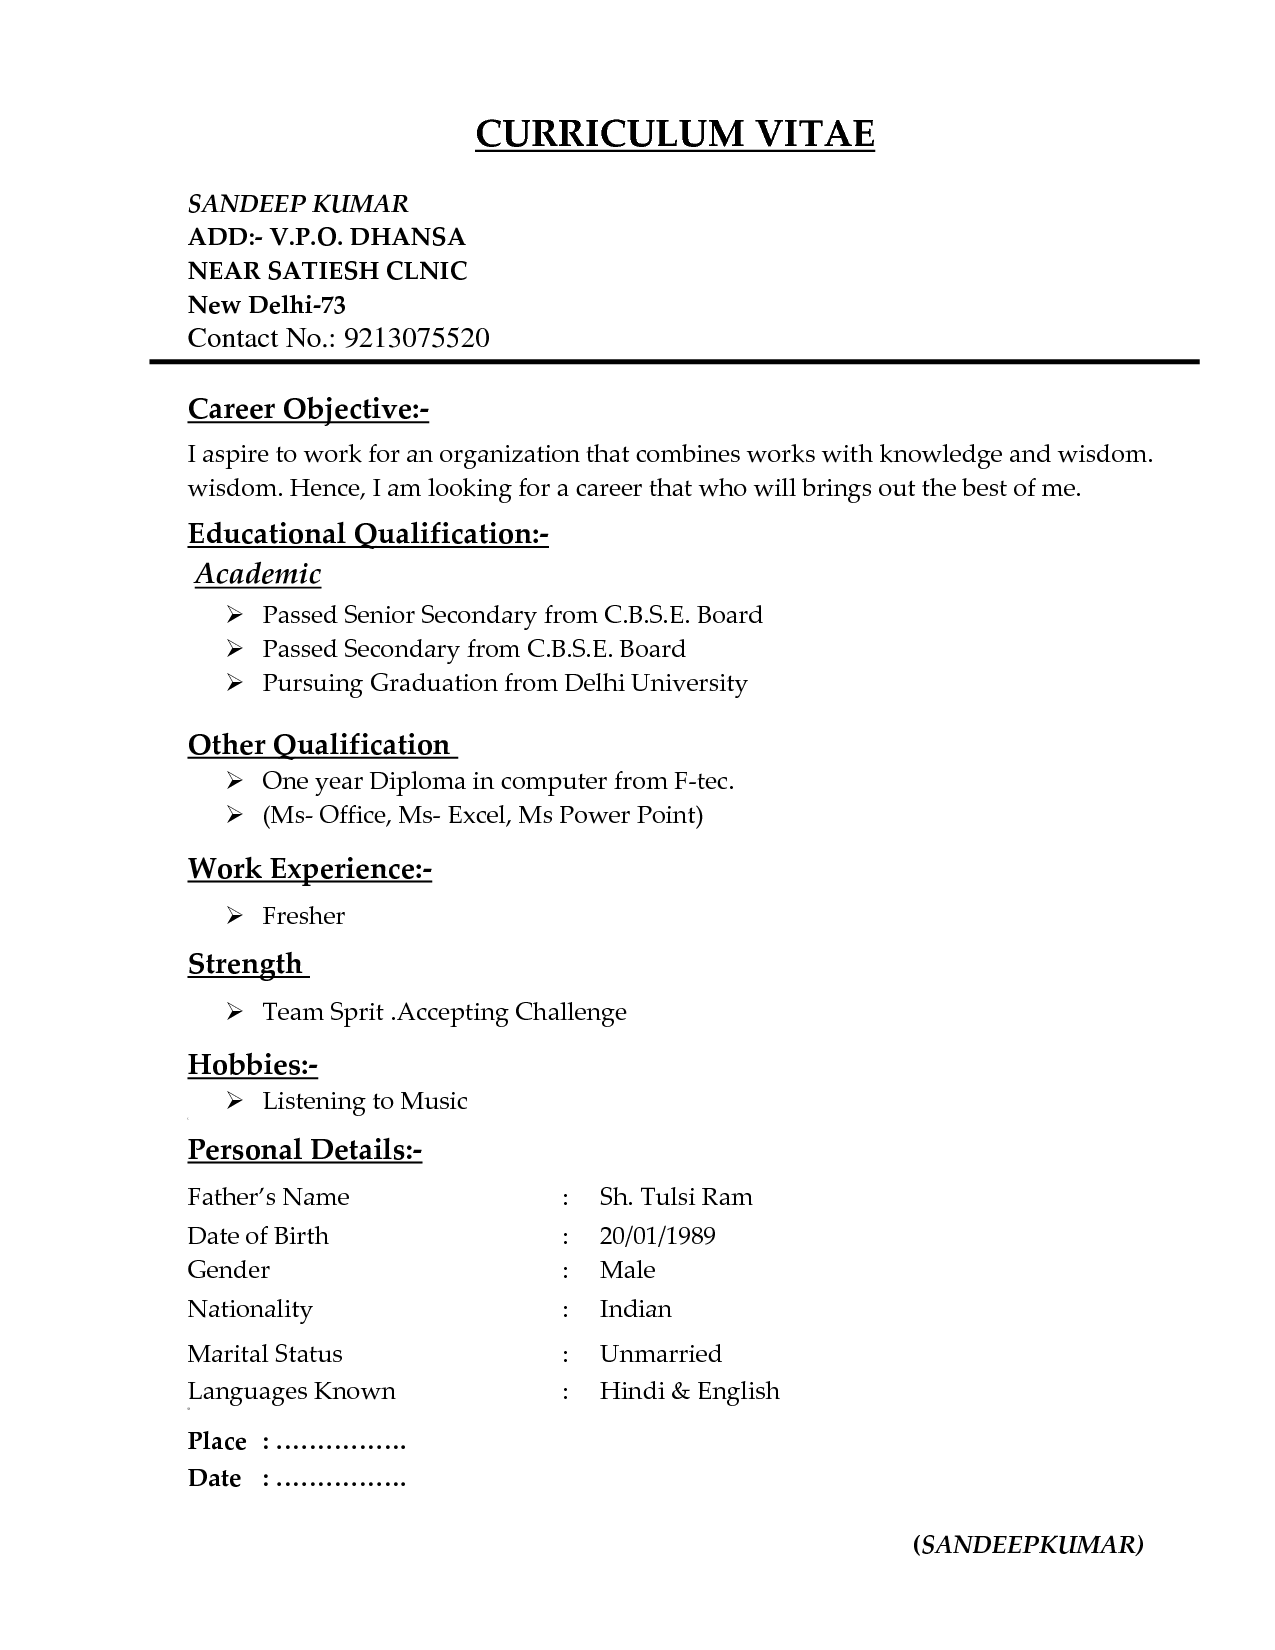 Resume Format Types 